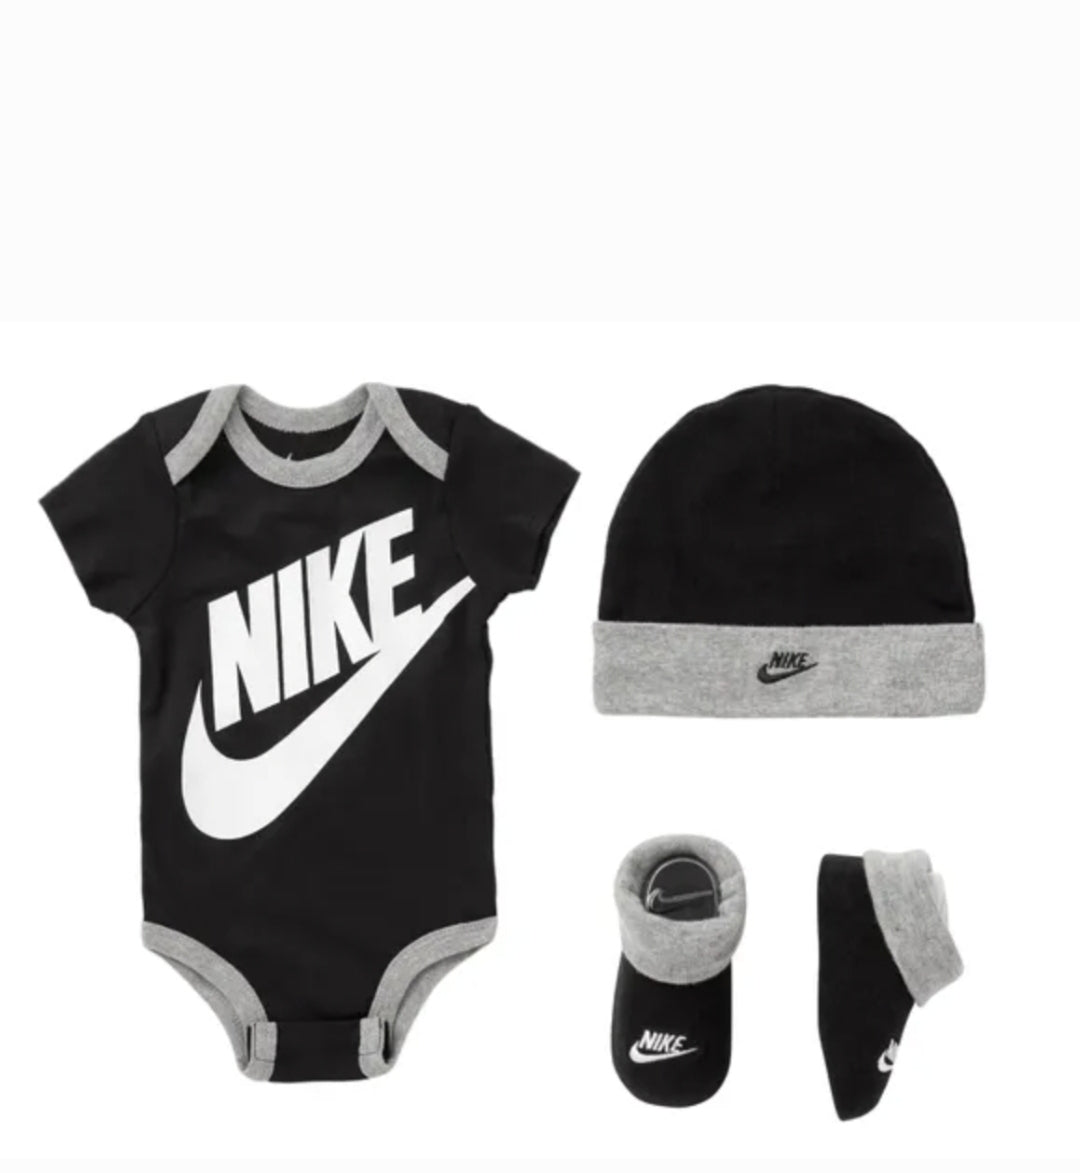 Nike coffret bébé Futura black/grey